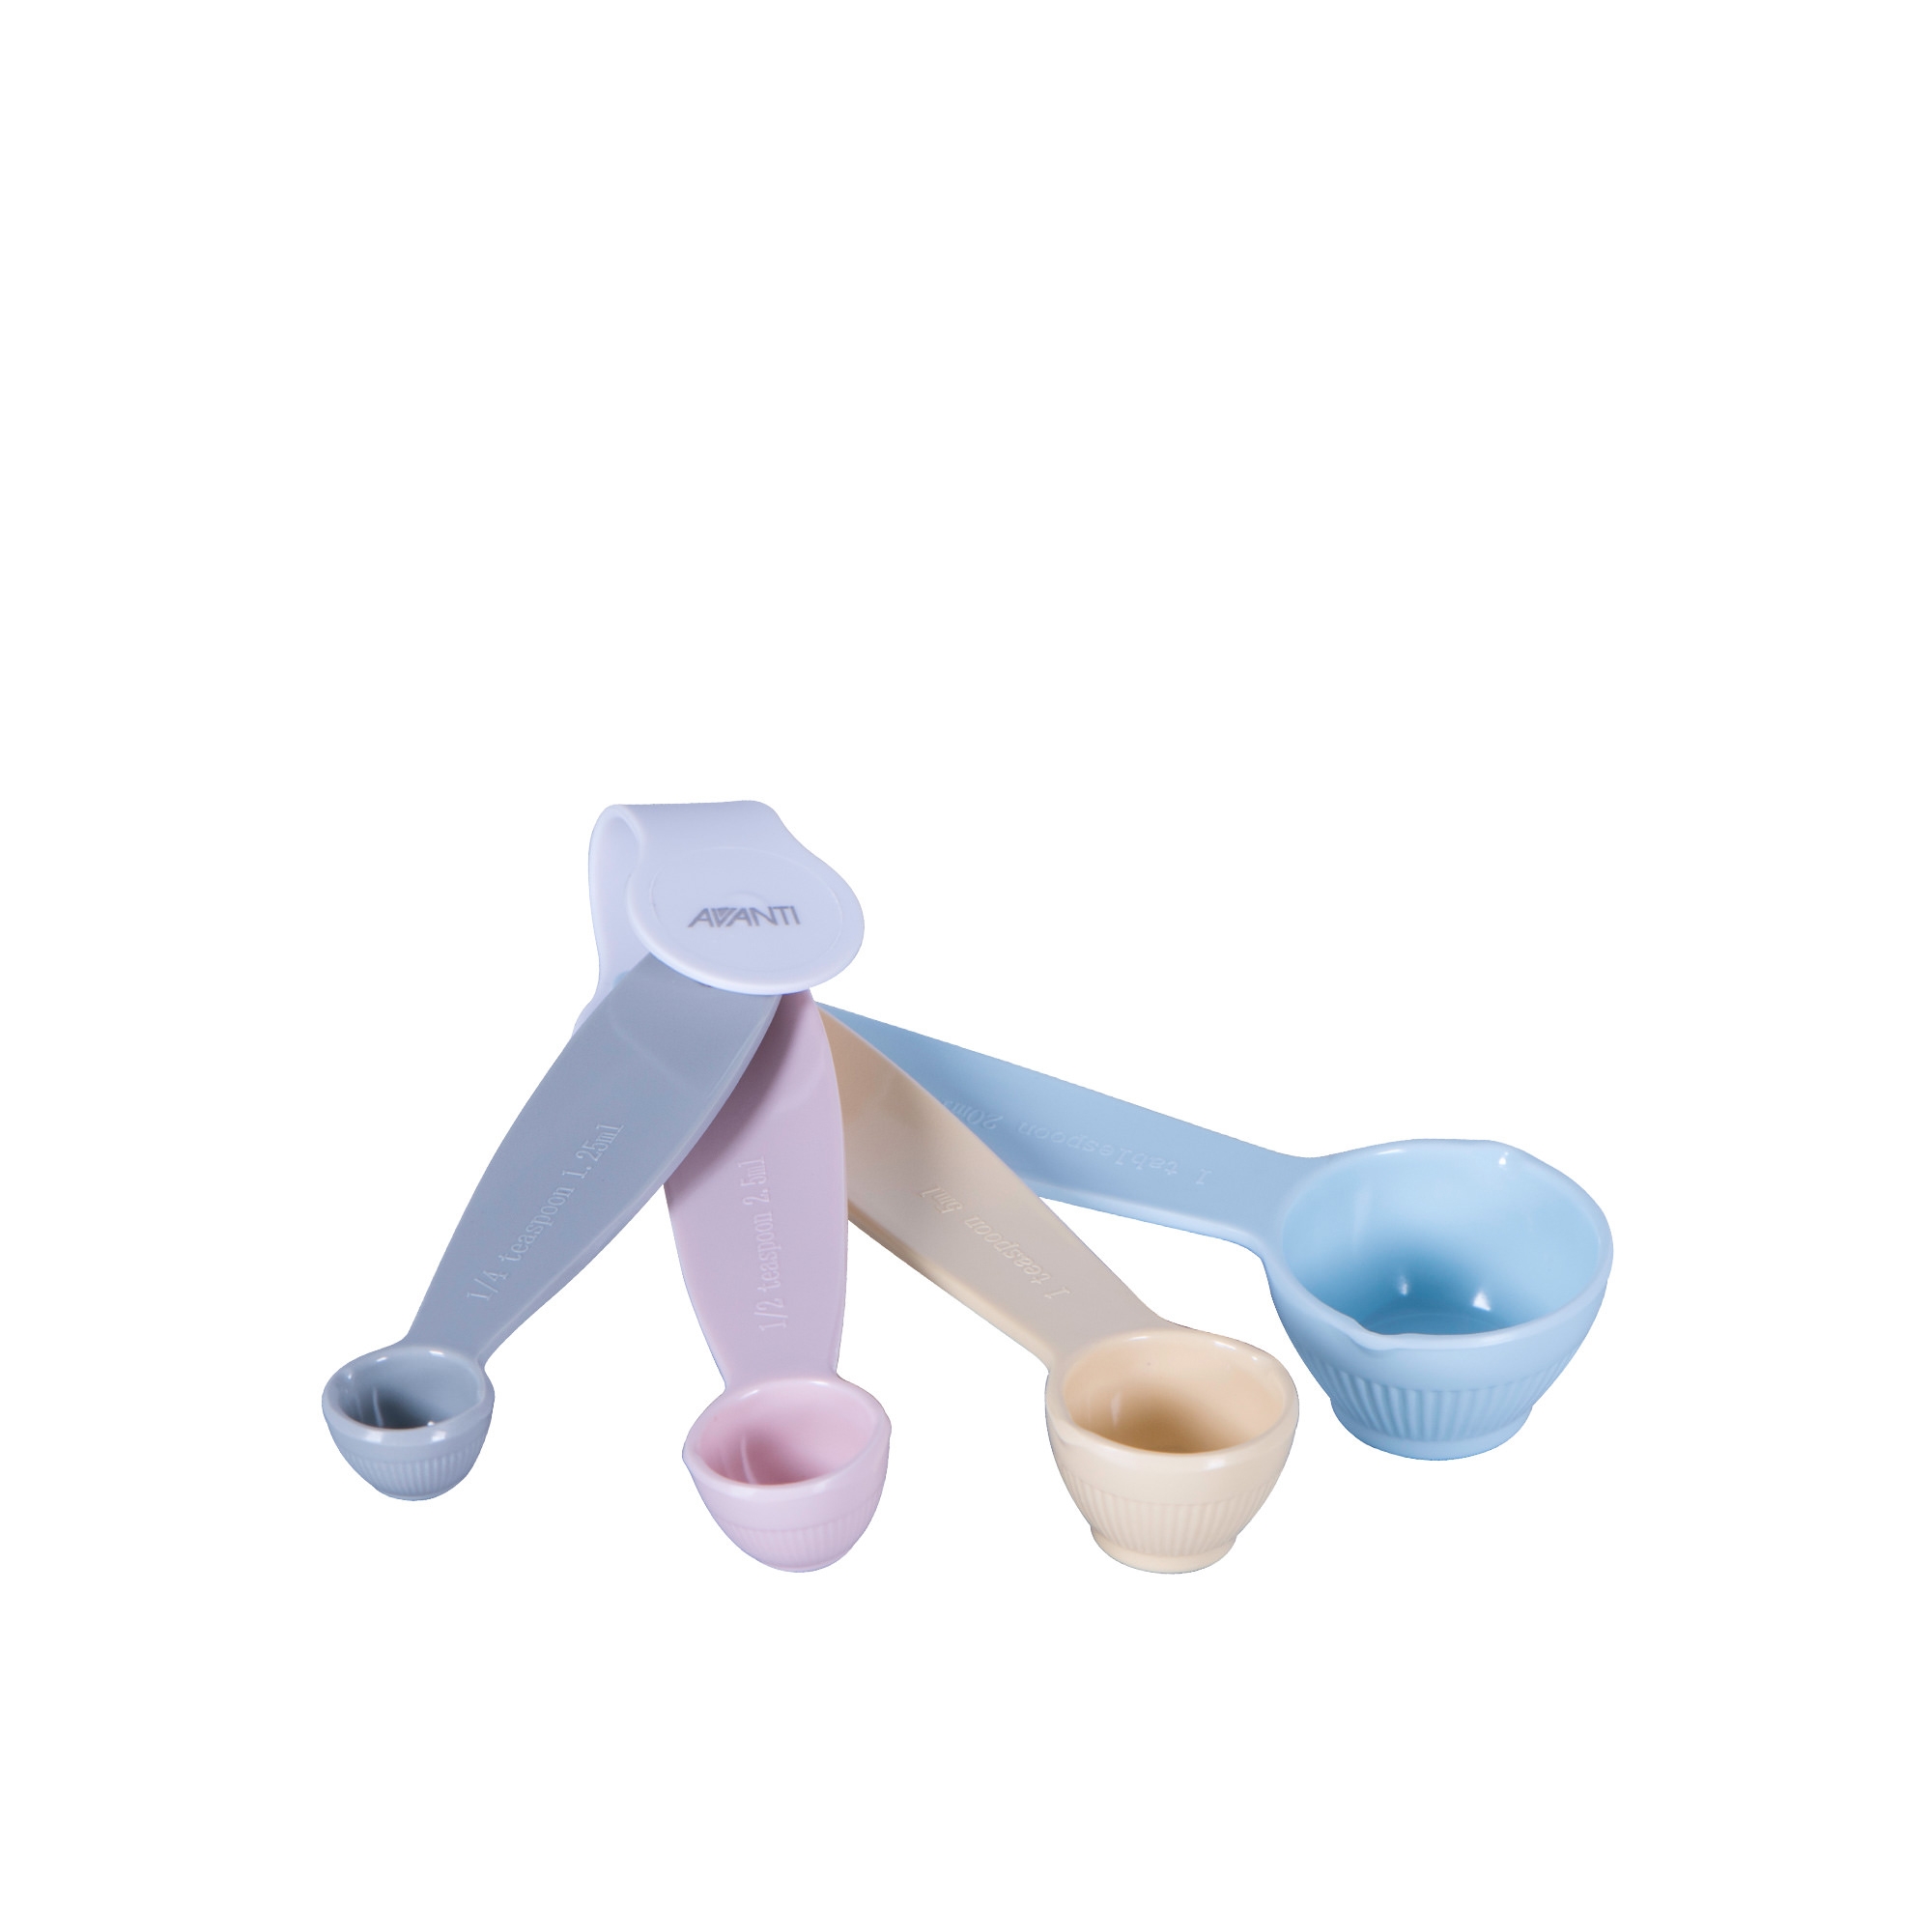 Avanti Ribbed Measuring Spoon Set 4pc Pastel Image 1